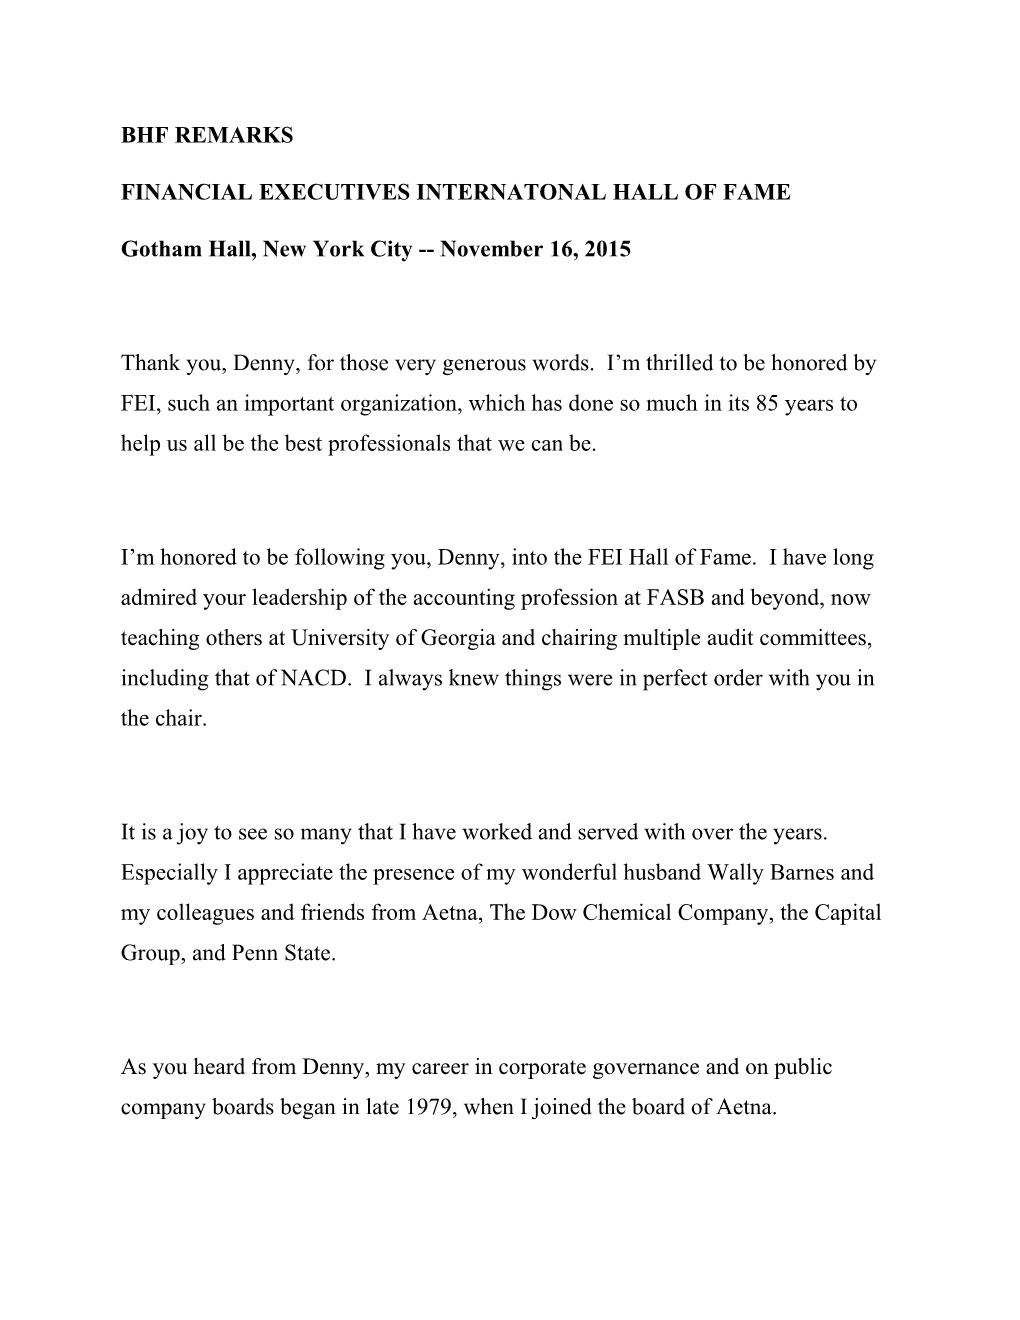 Financial Executives Internatonal Hall of Fame